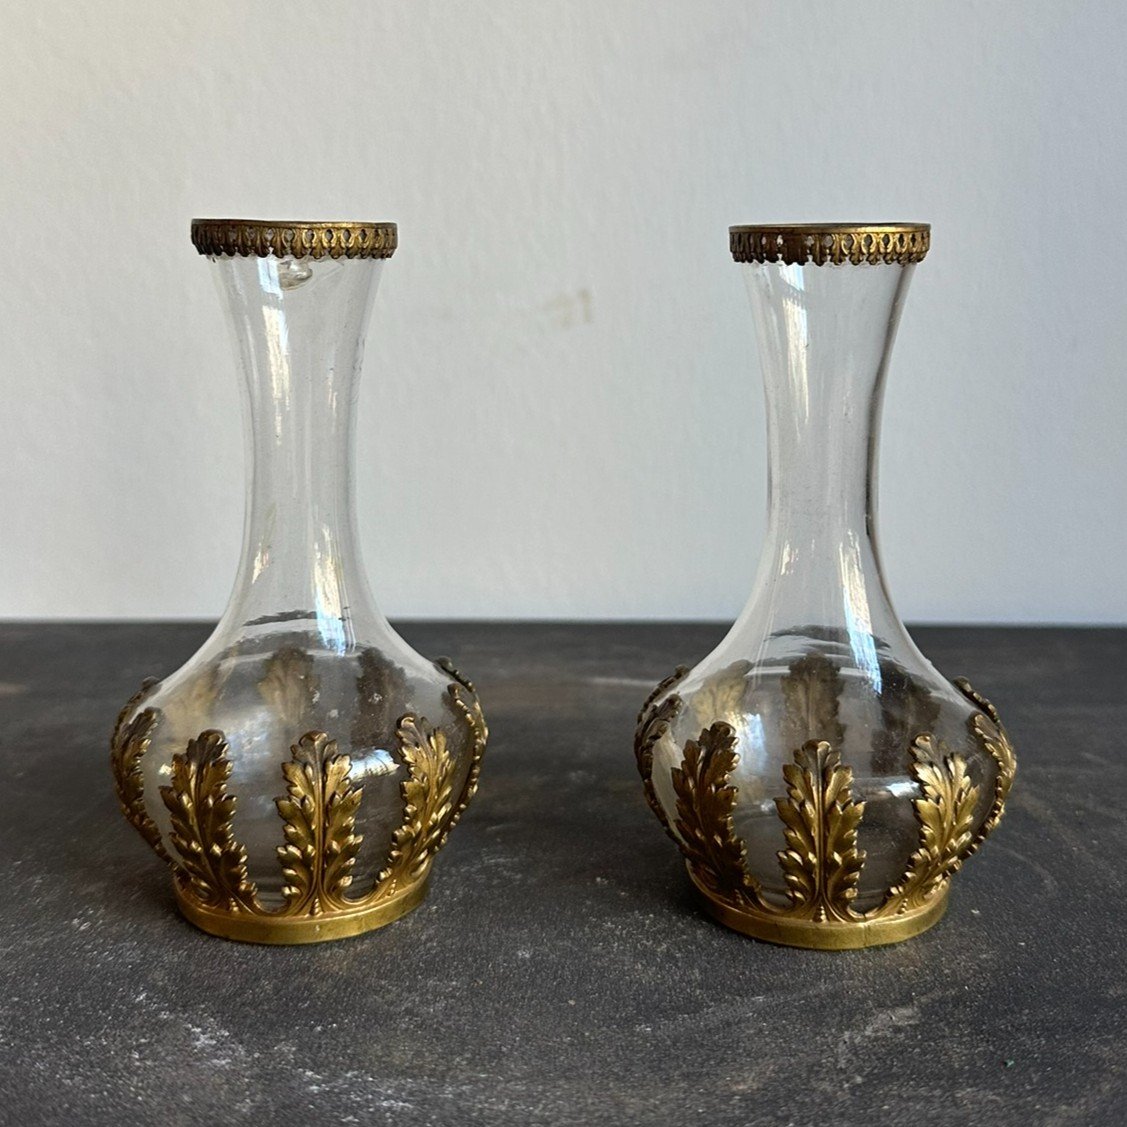 Vases en verre et bronze doré, période Napoléon III.